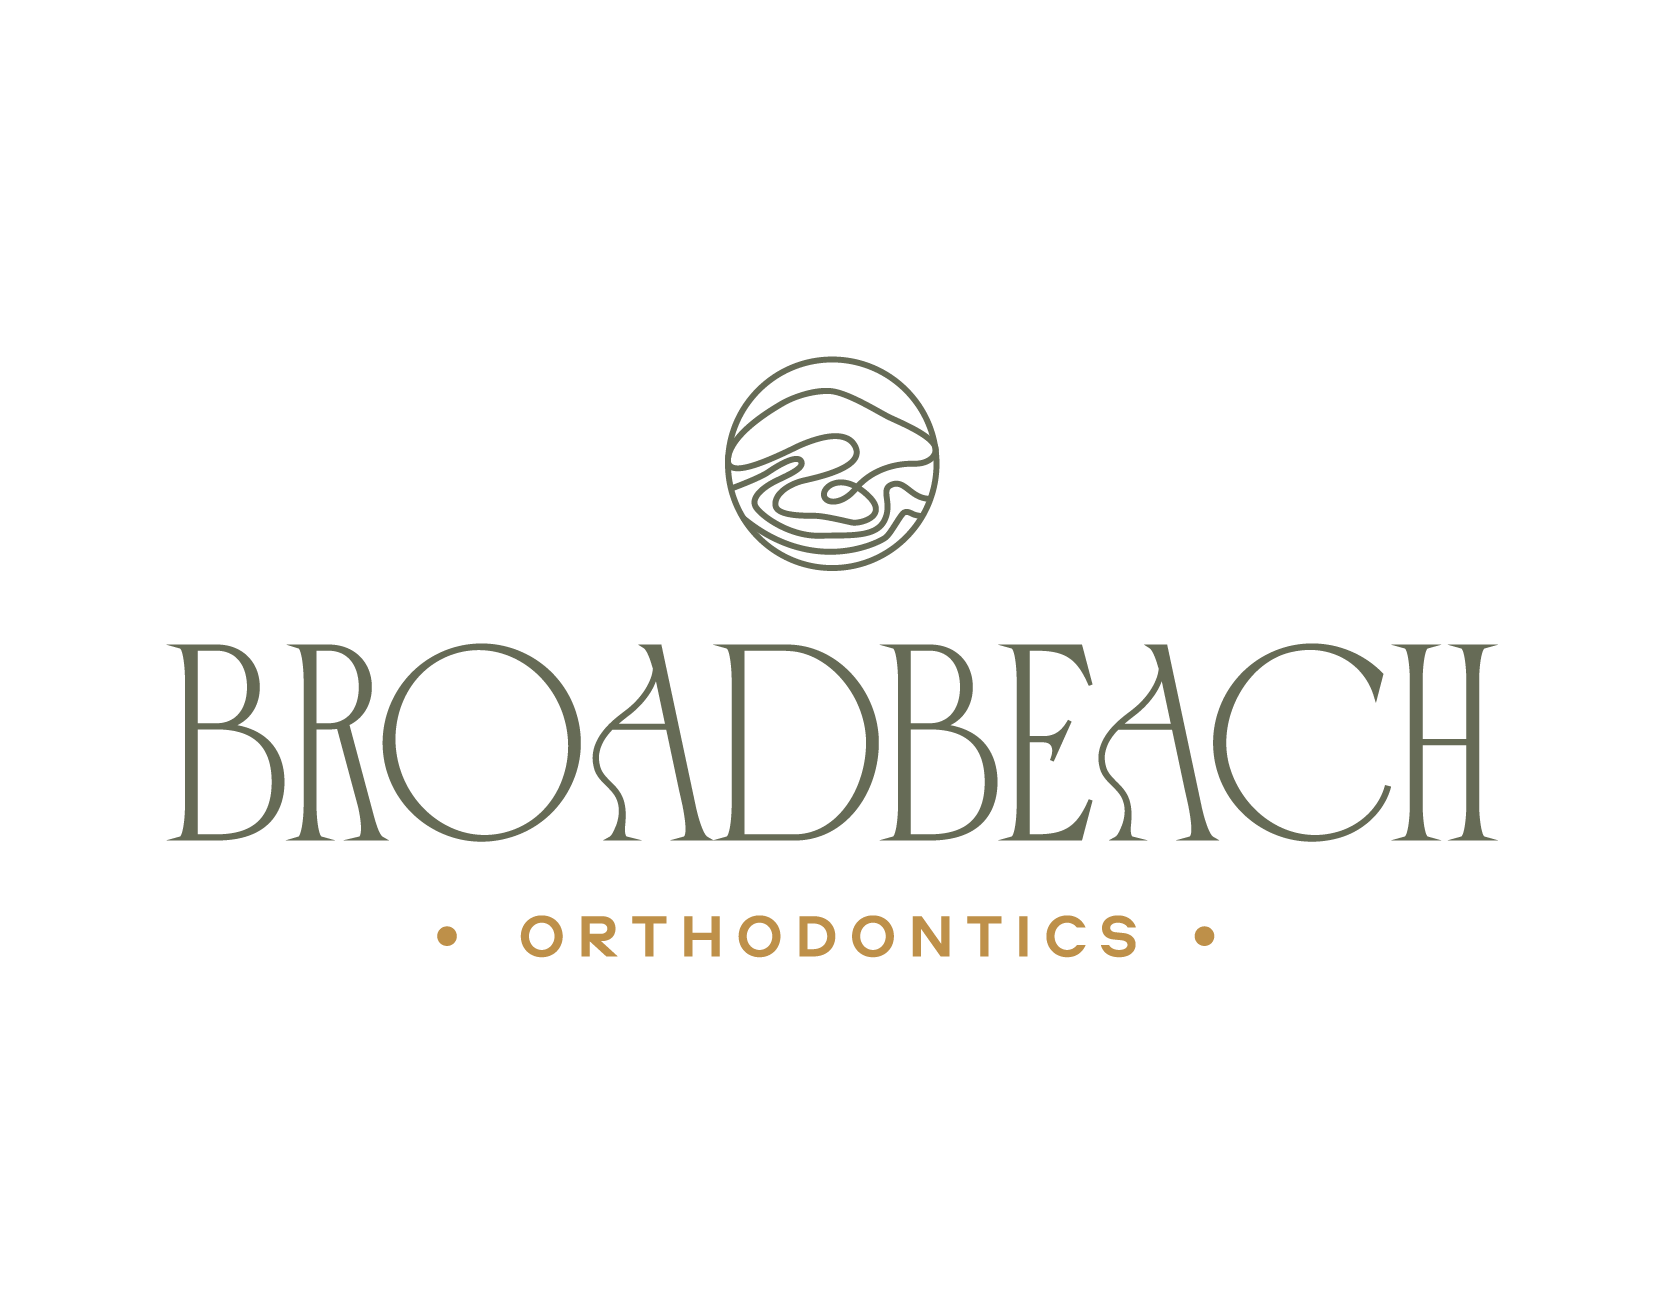 Broadbeach Orthodontics